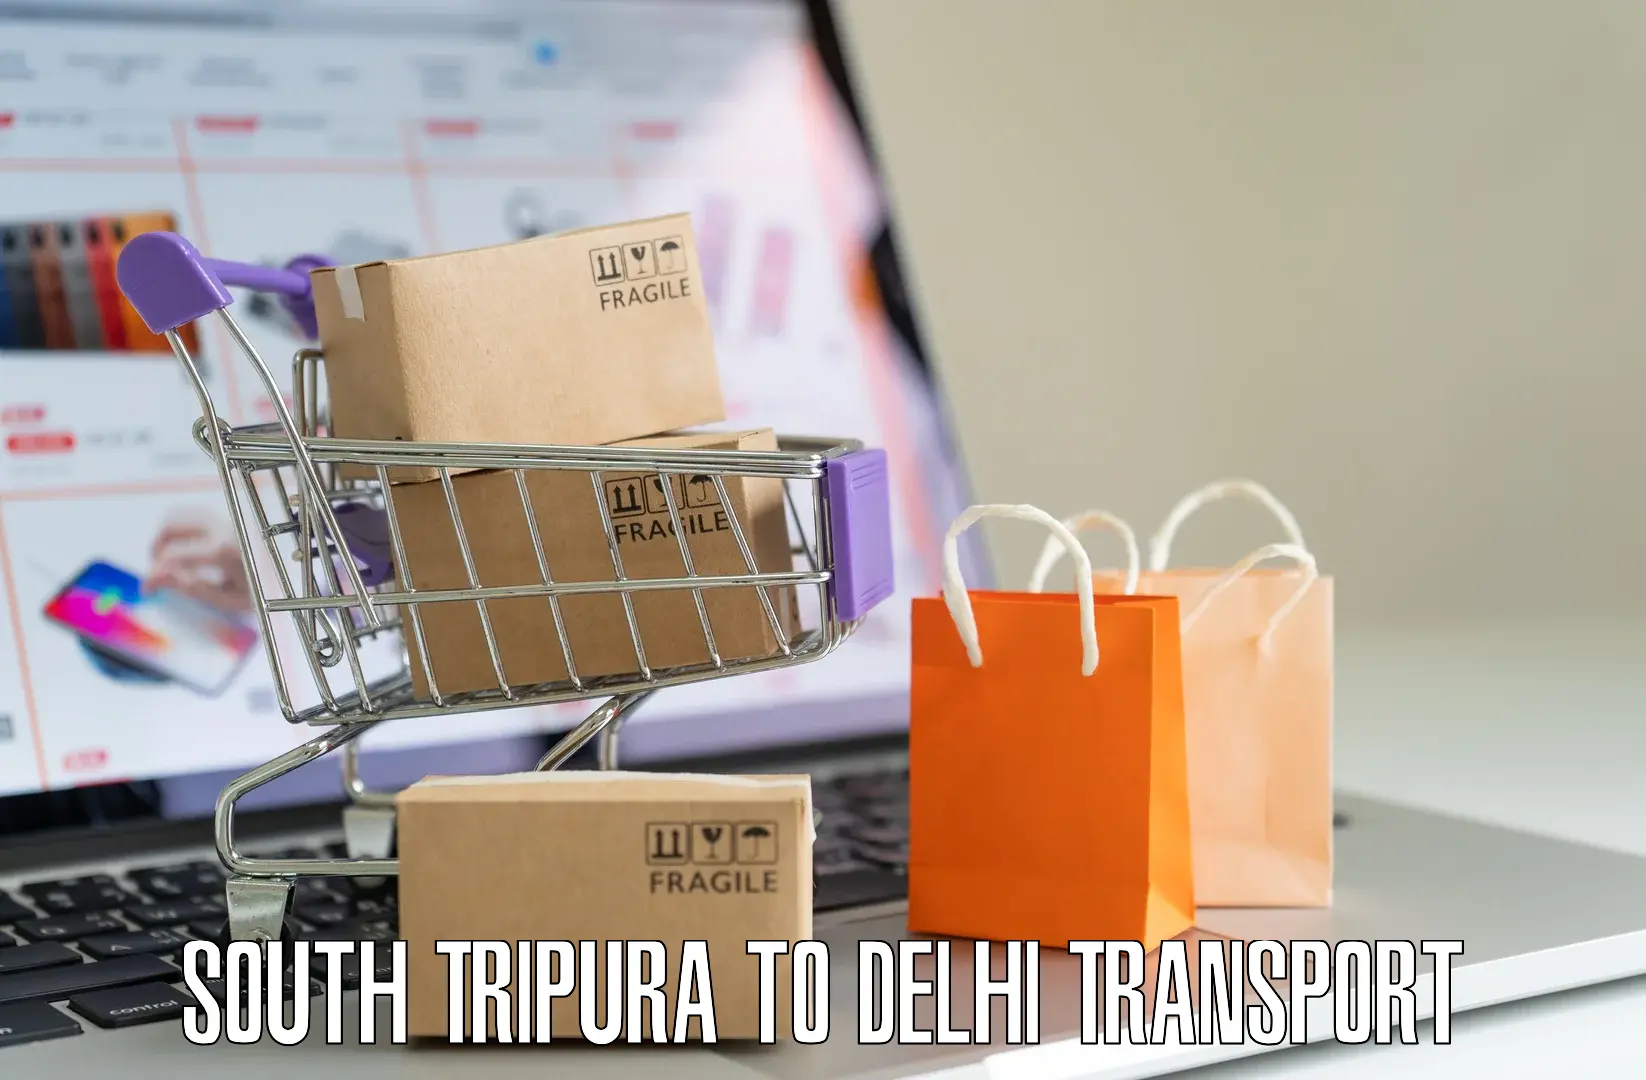 Daily transport service South Tripura to University of Delhi